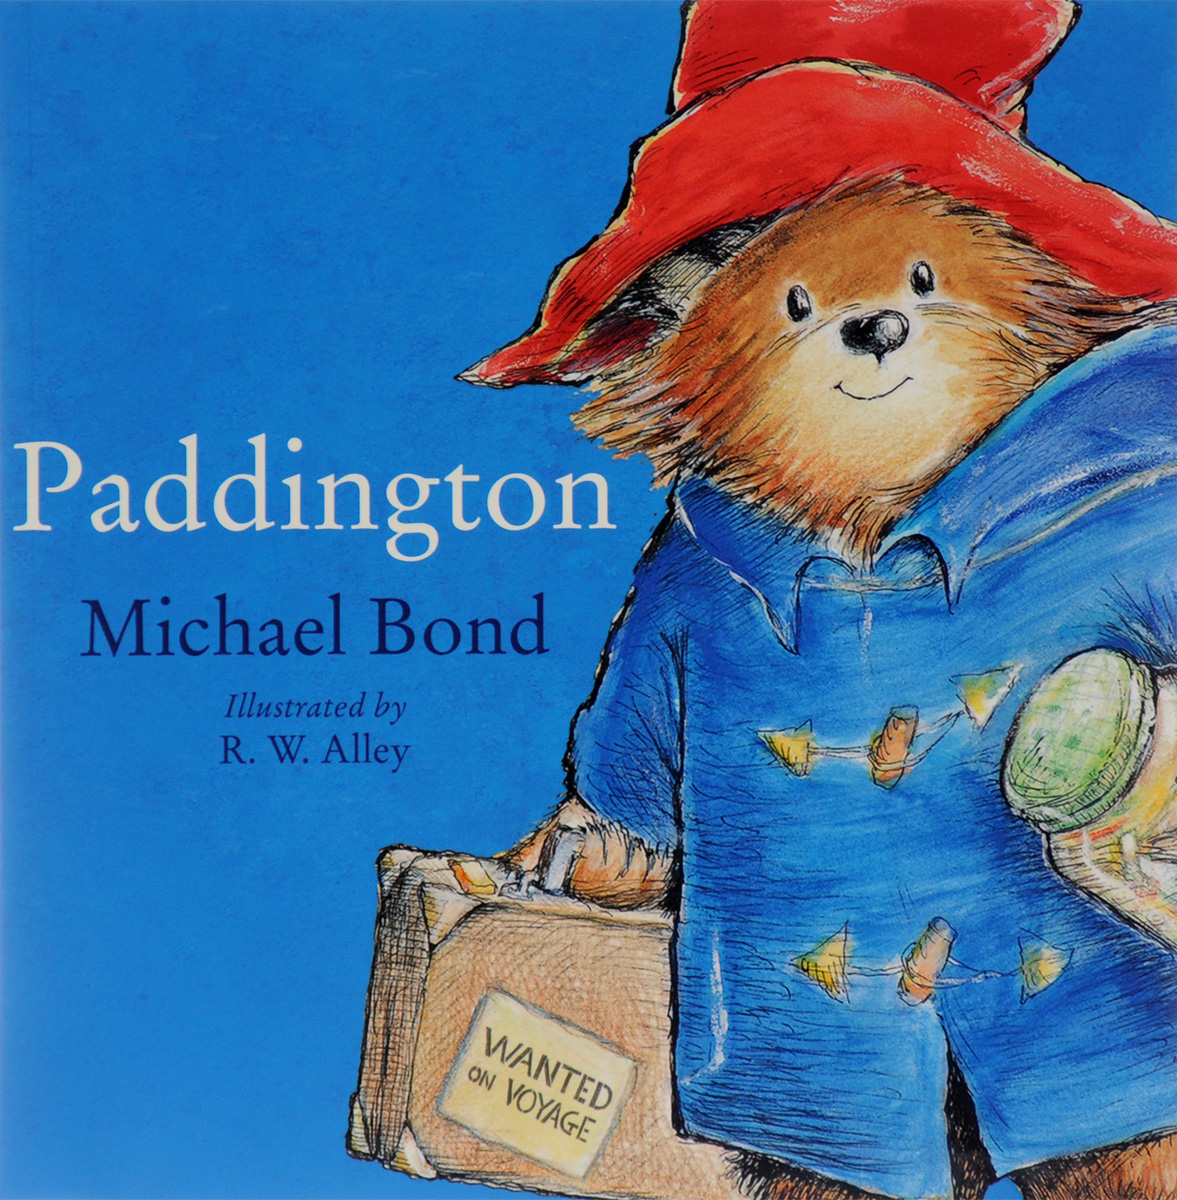 Paddington: The Original Story of the Bear from Peru